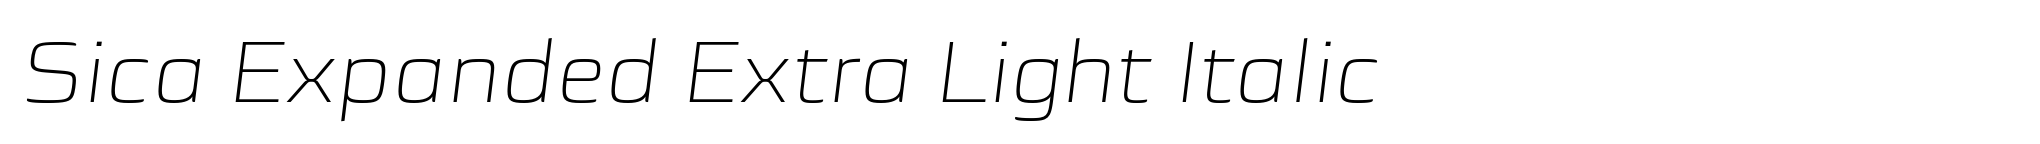 Sica Expanded Extra Light Italic image